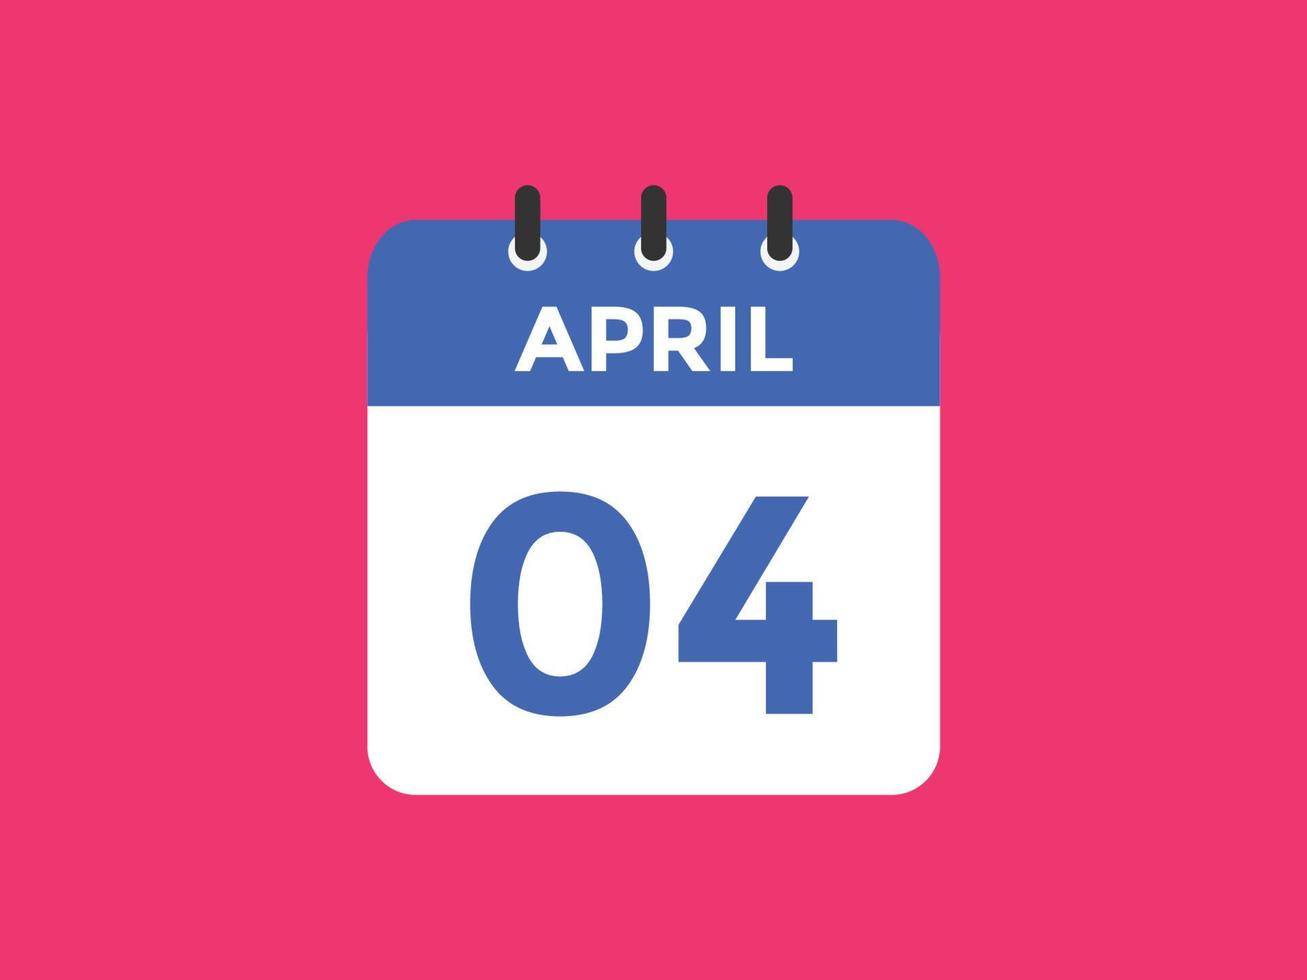 april 4 kalender påminnelse. 4:e april dagligen kalender ikon mall. kalender 4:e april ikon design mall. vektor illustration